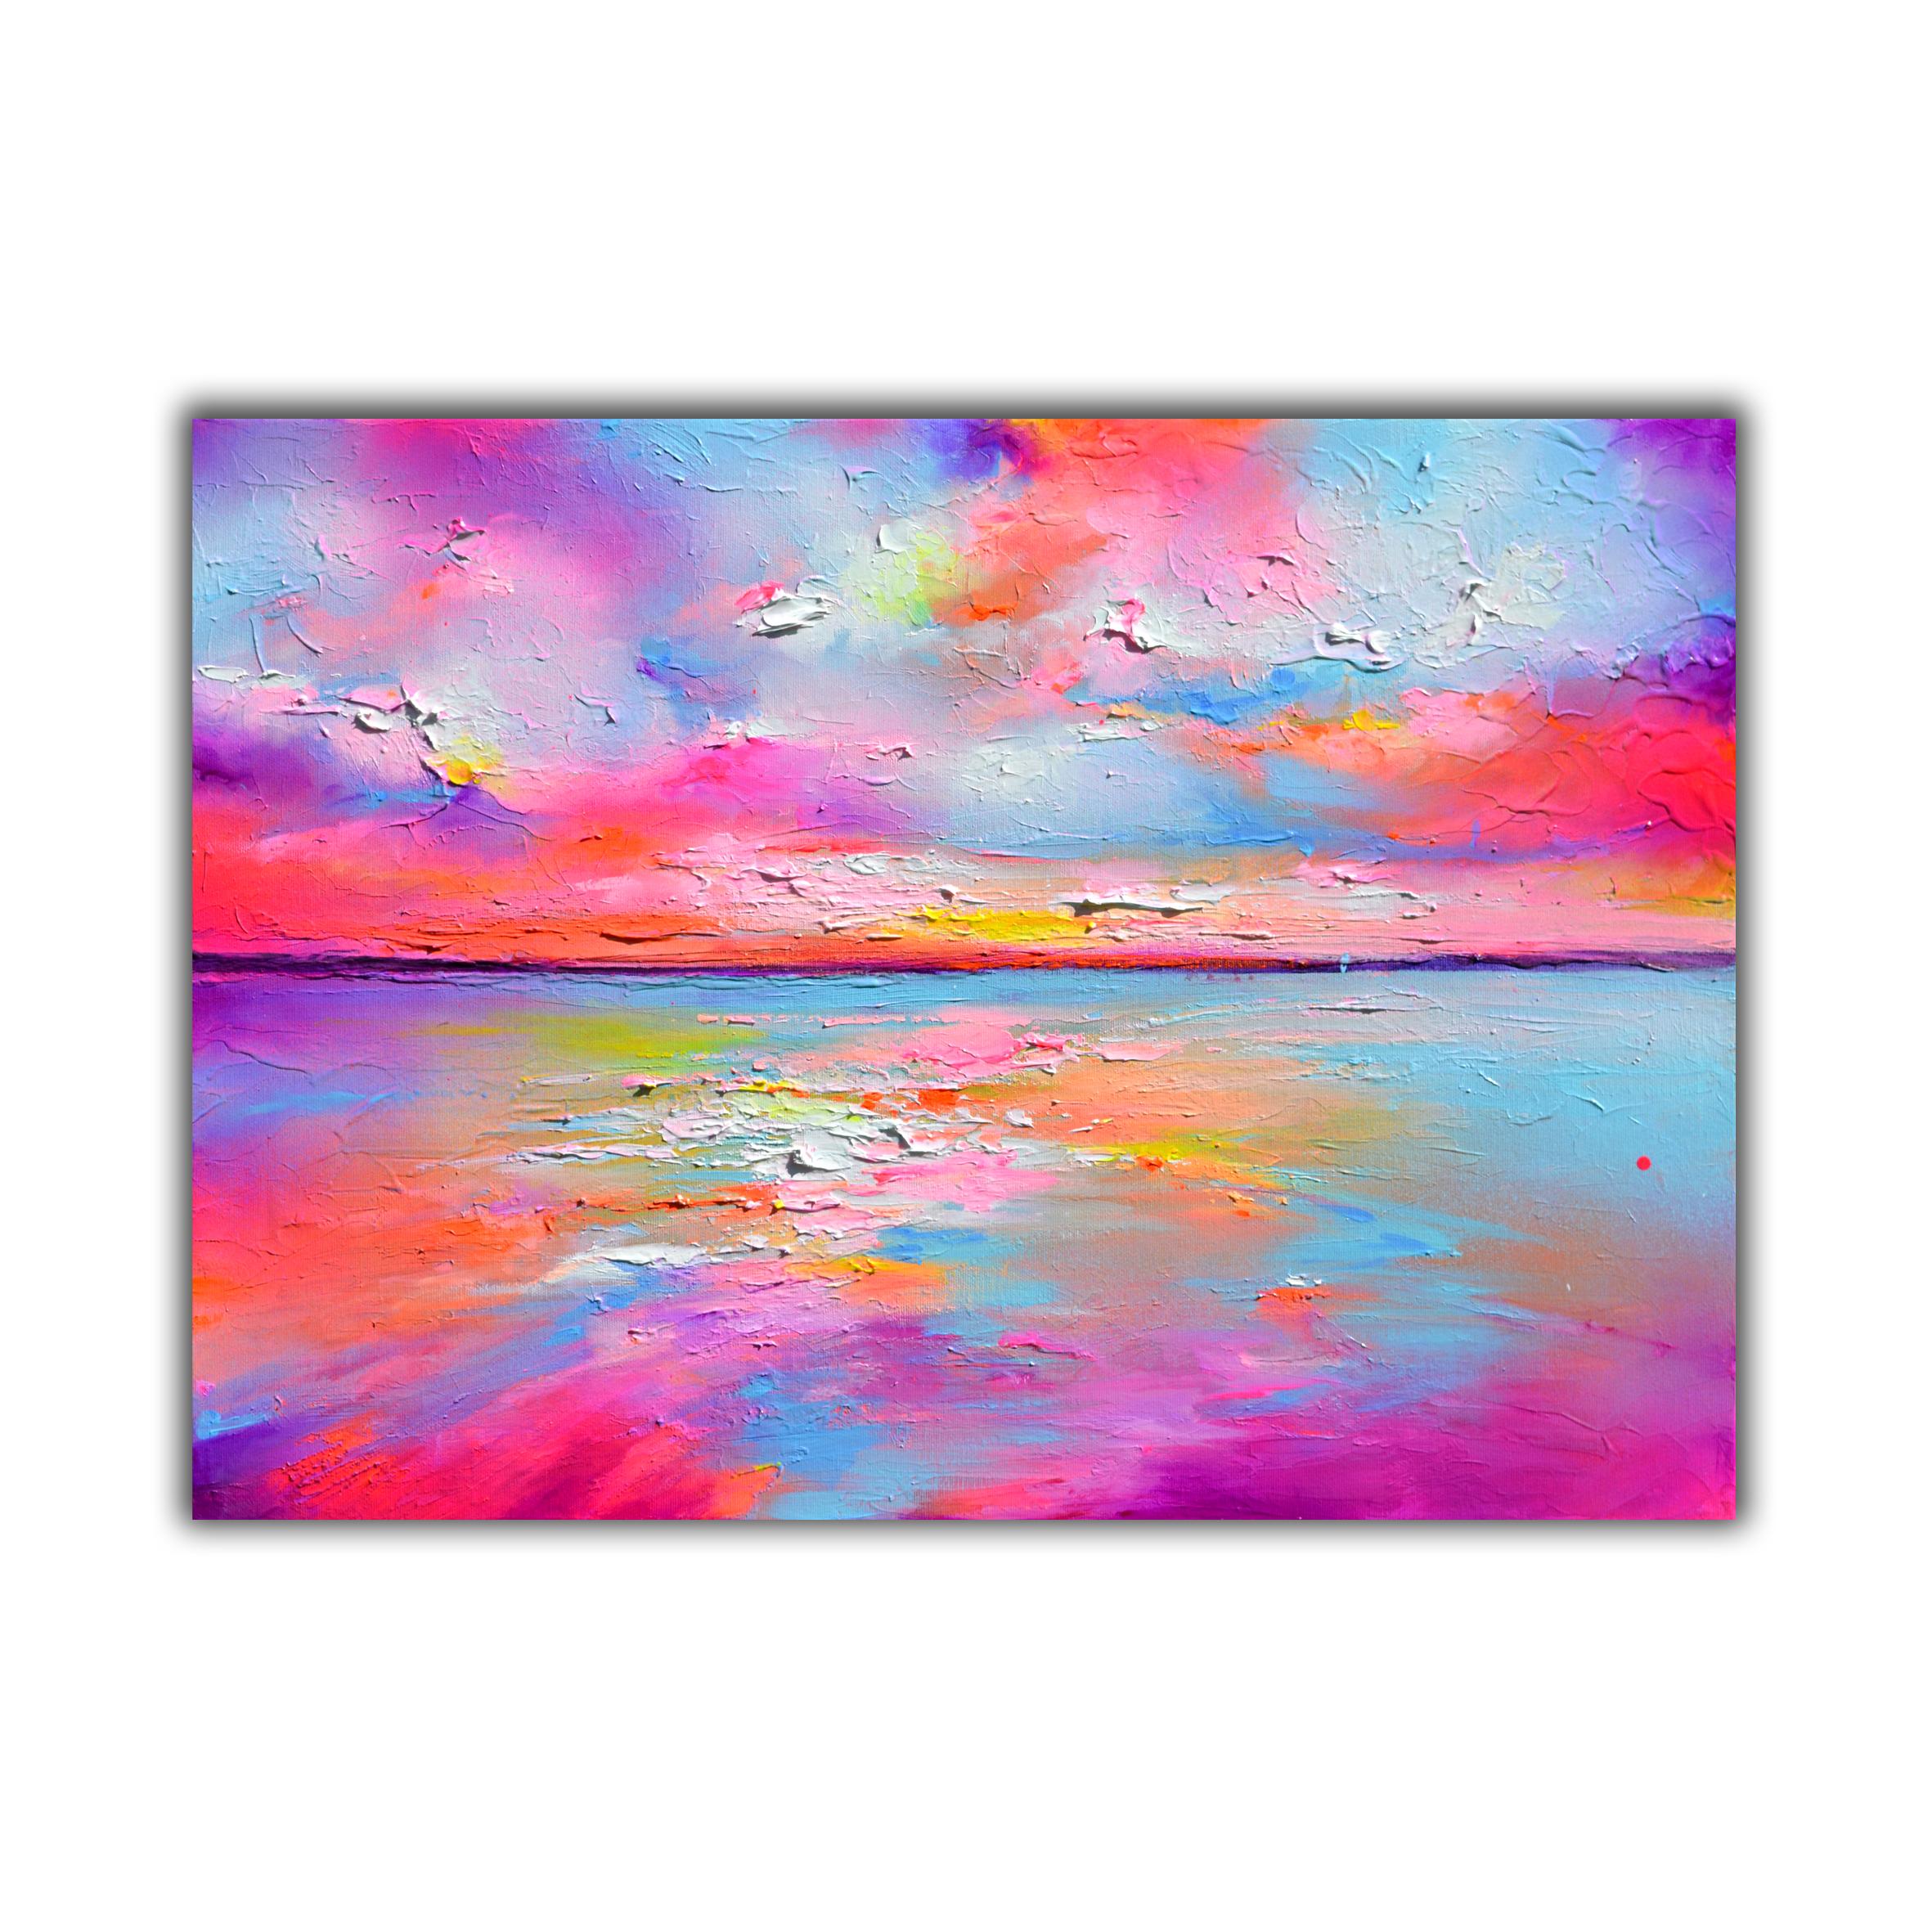 New Horizon 179 Colourful Sunset Seascape 50x70 cm - Painting by Soos Roxana Gabriela